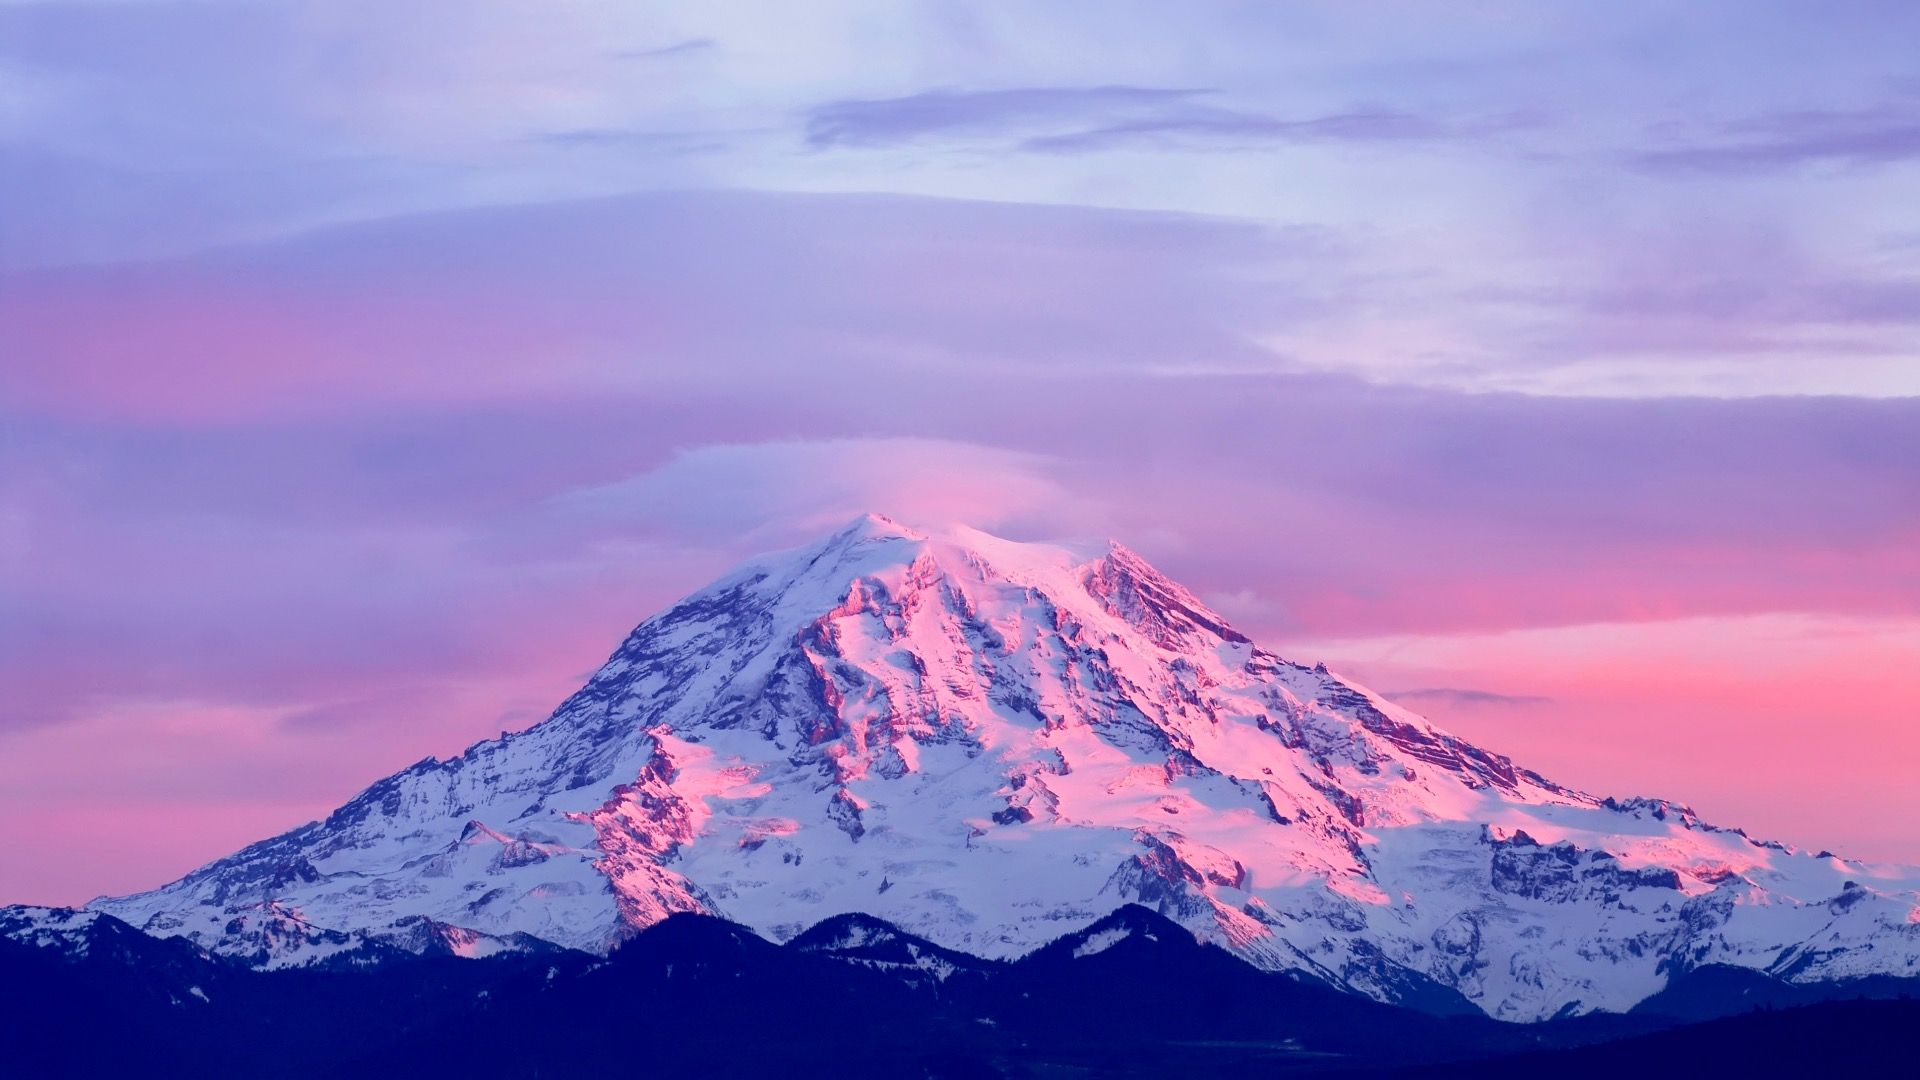 Pink sunset light on Mount Rainier in the Cascade Range, Washington State, USA